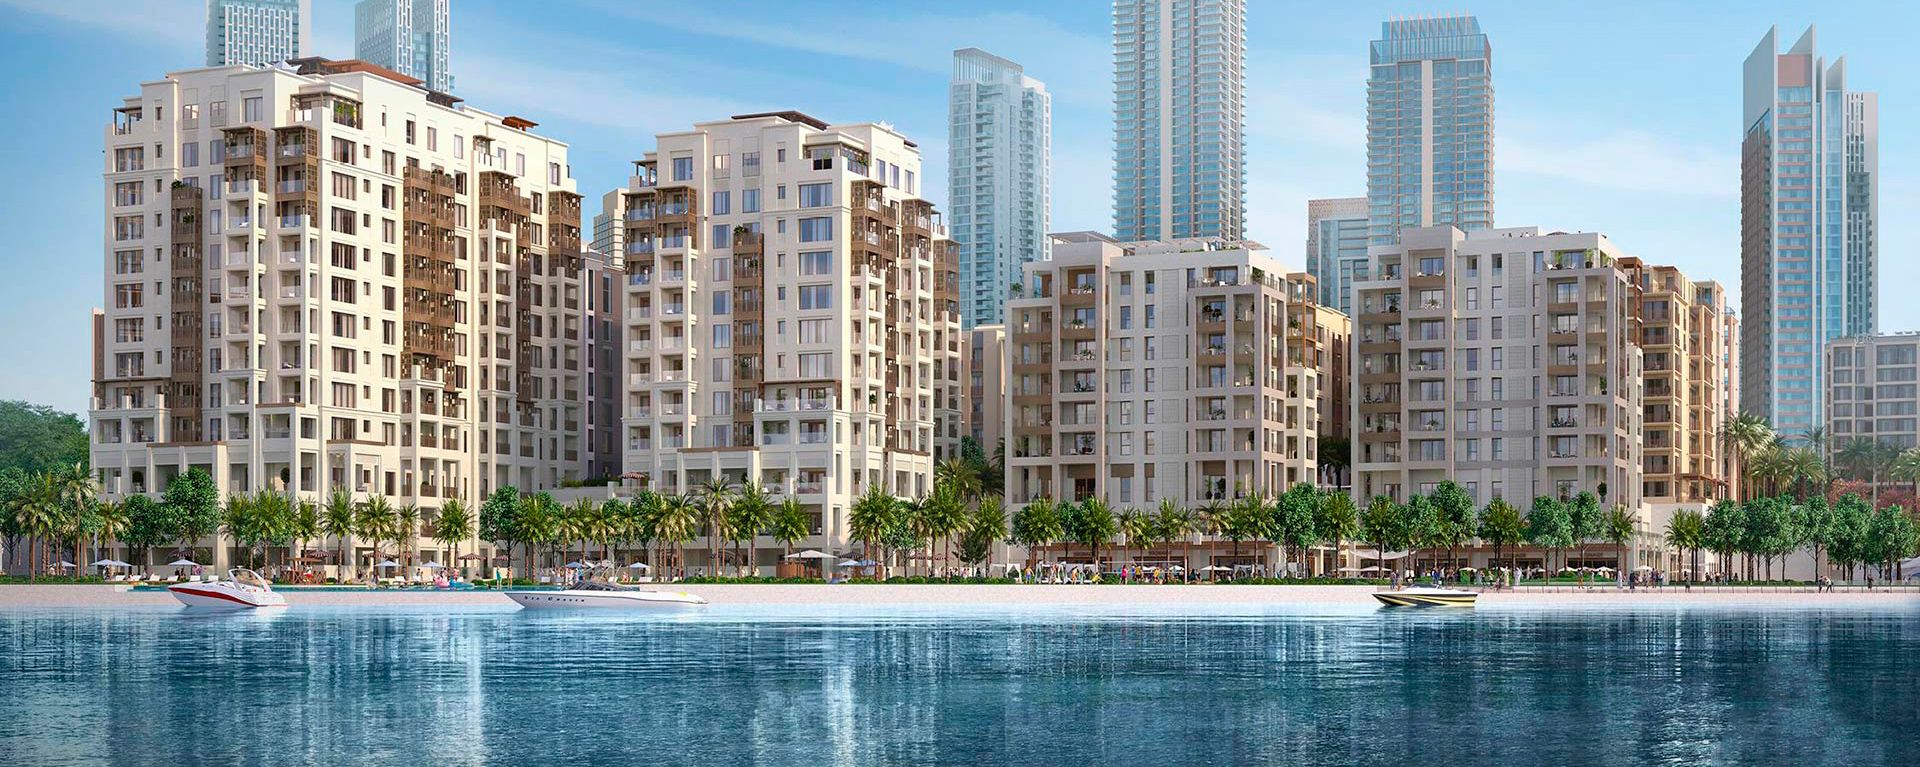 Lotus at Creek Beach - Limitless Valley - Real Estate - Dubai